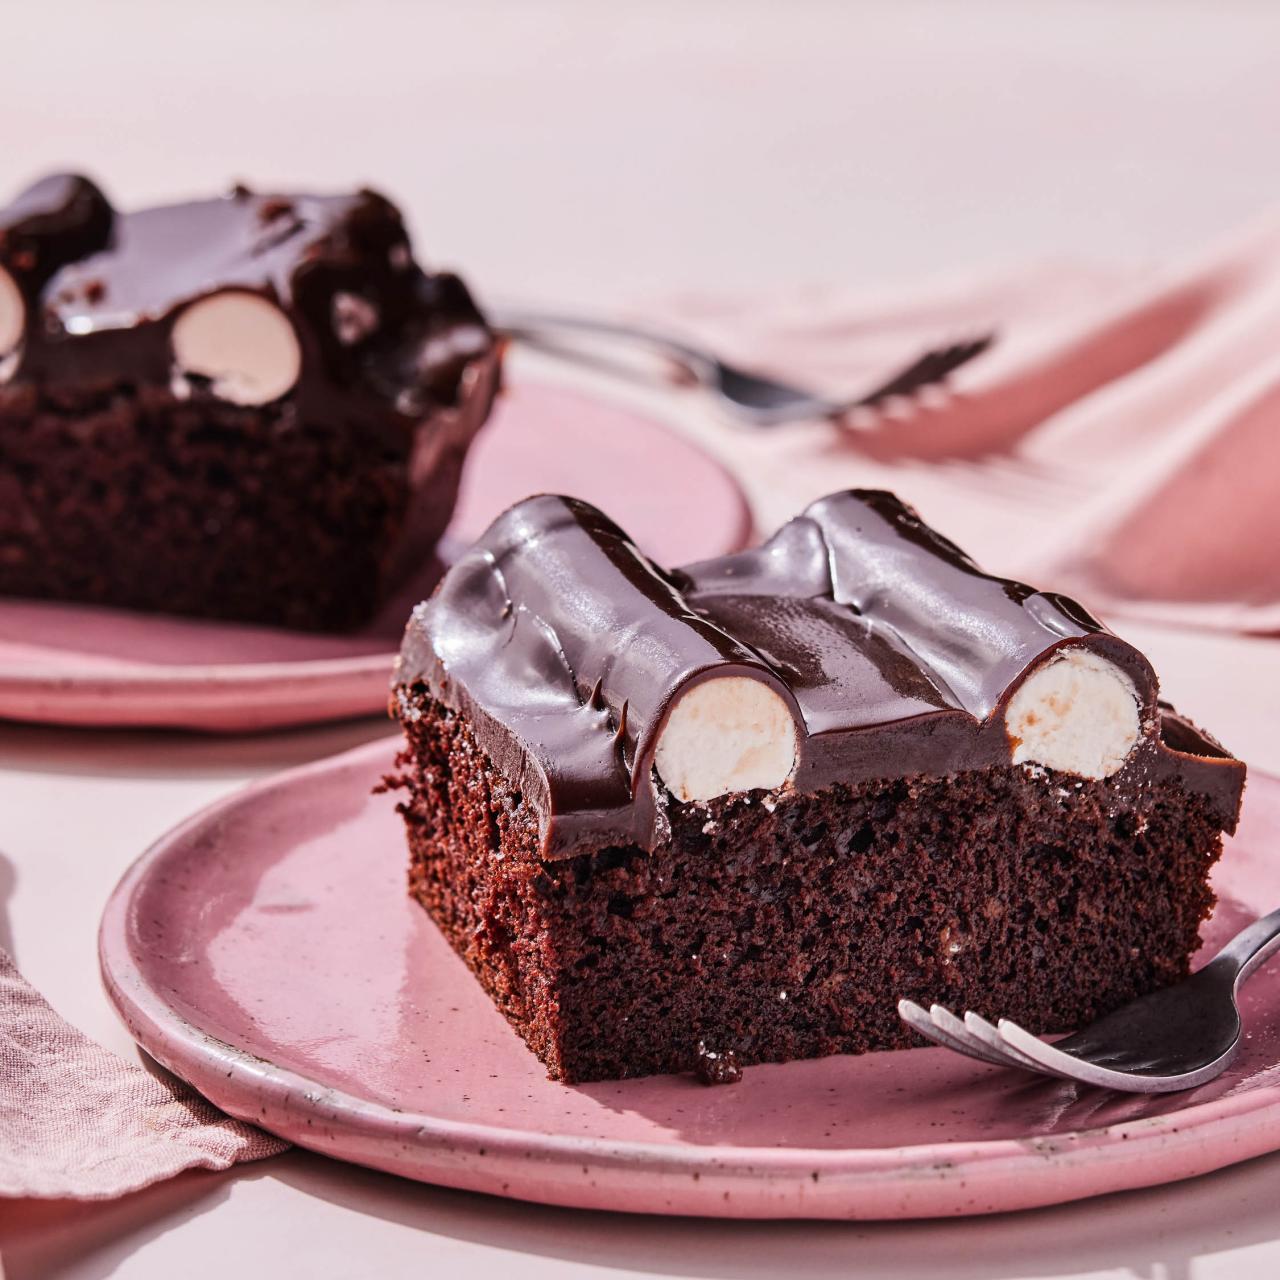 Sander's fine chocolatiers Bumpy cake fountain ice cream; chocol1.5-qt